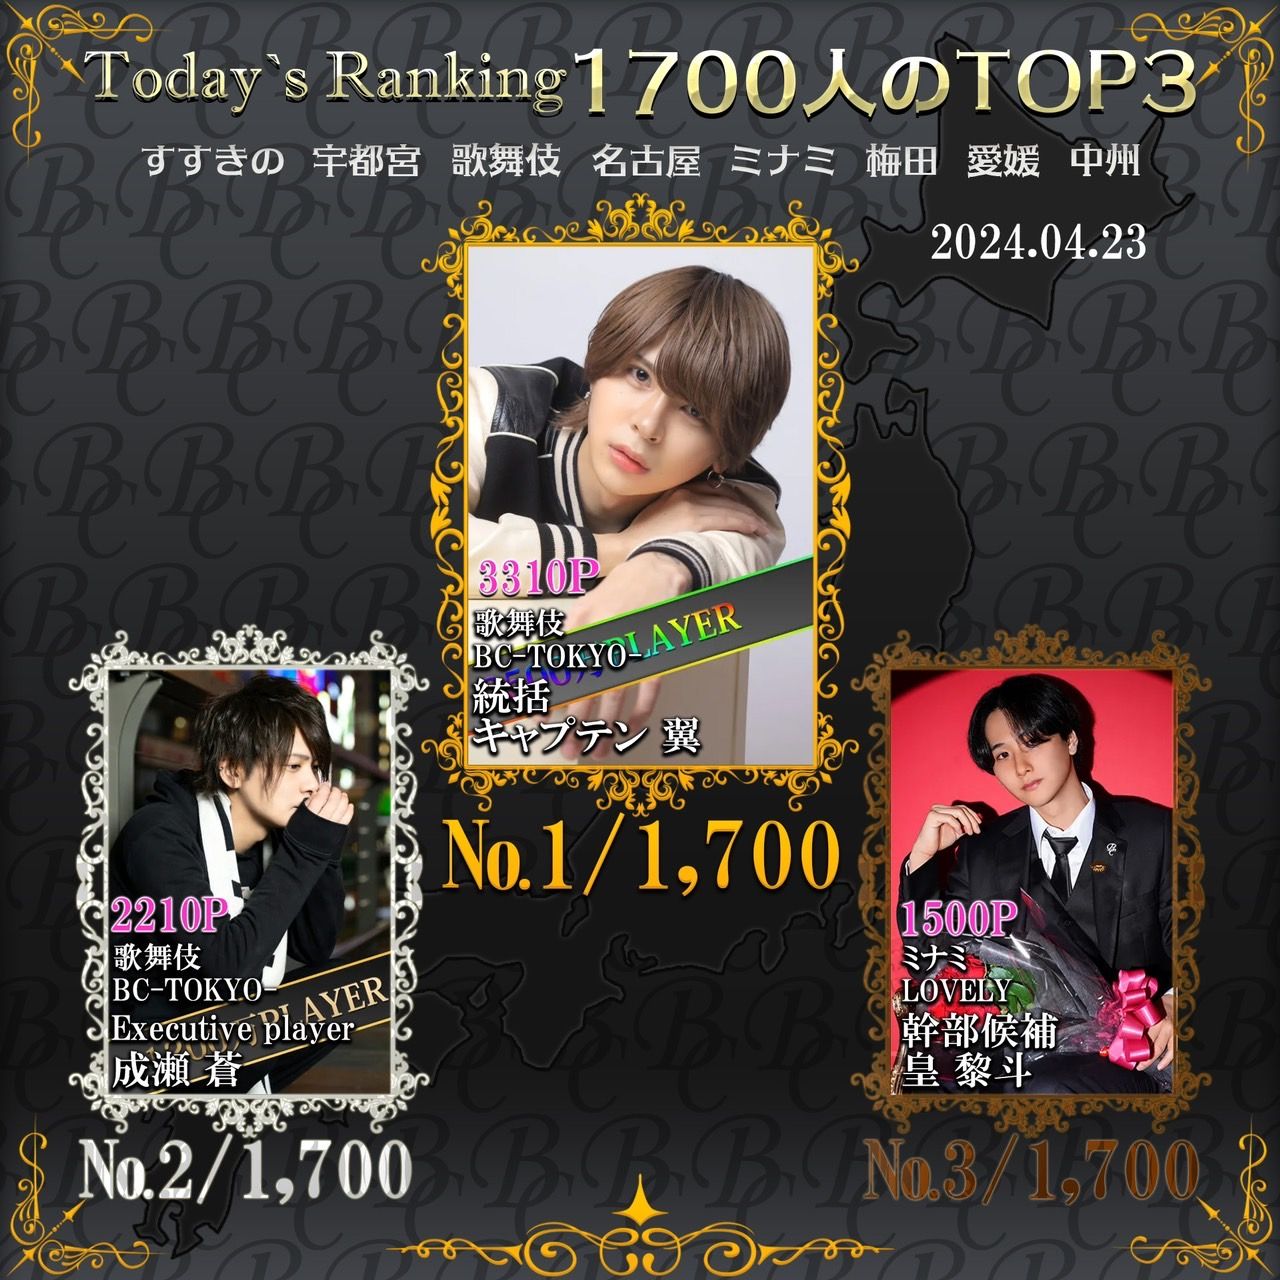 4/23 Today’s Ranking